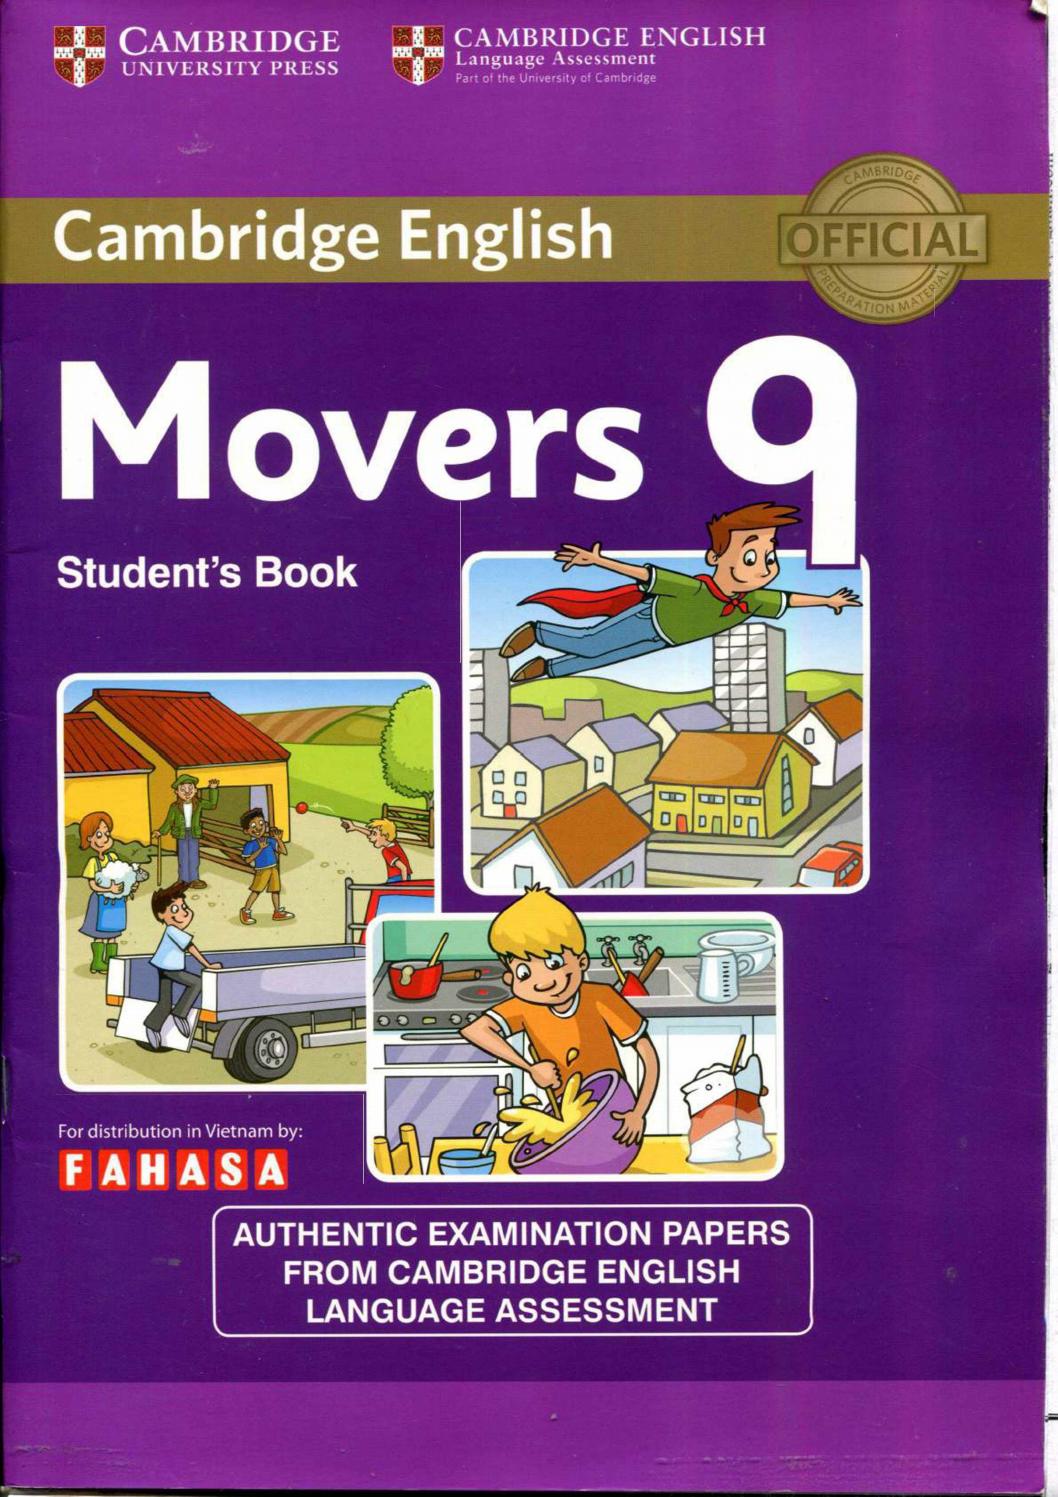 Bộ sách tiếng Anh Cambridge English Movers 9